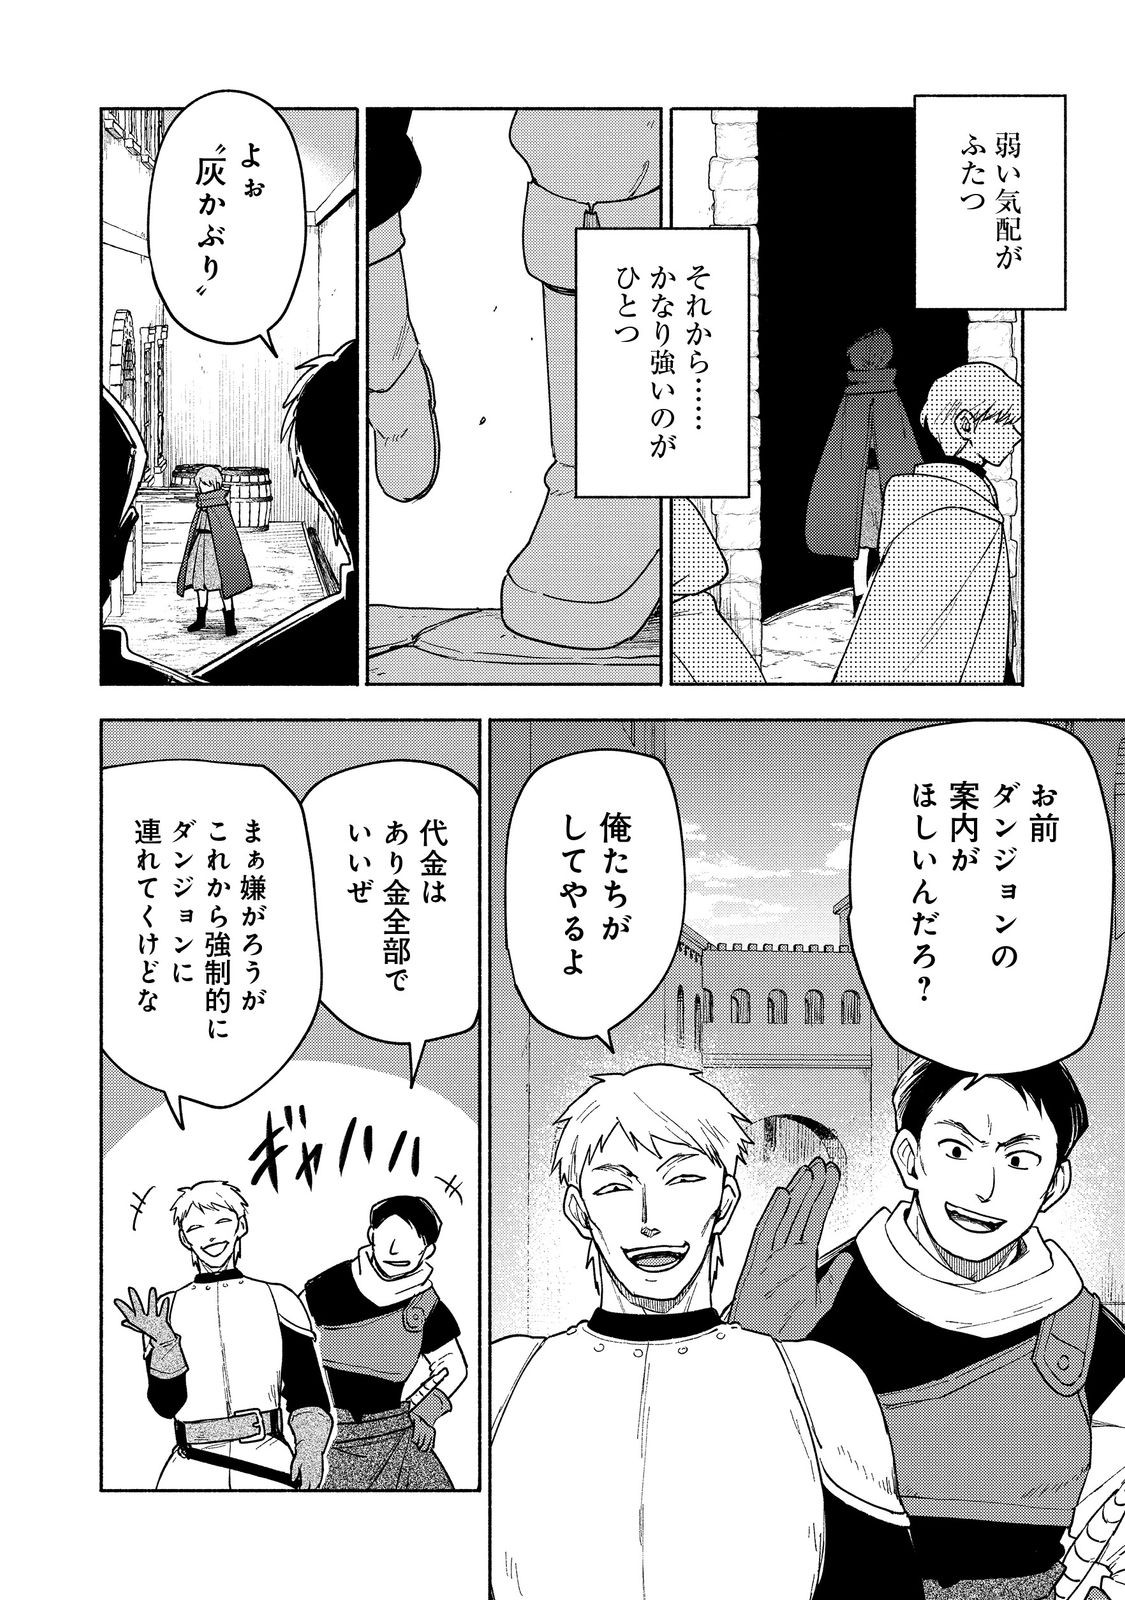 Otome Game no Heroine de Saikyou Survival - Chapter 22 - Page 38